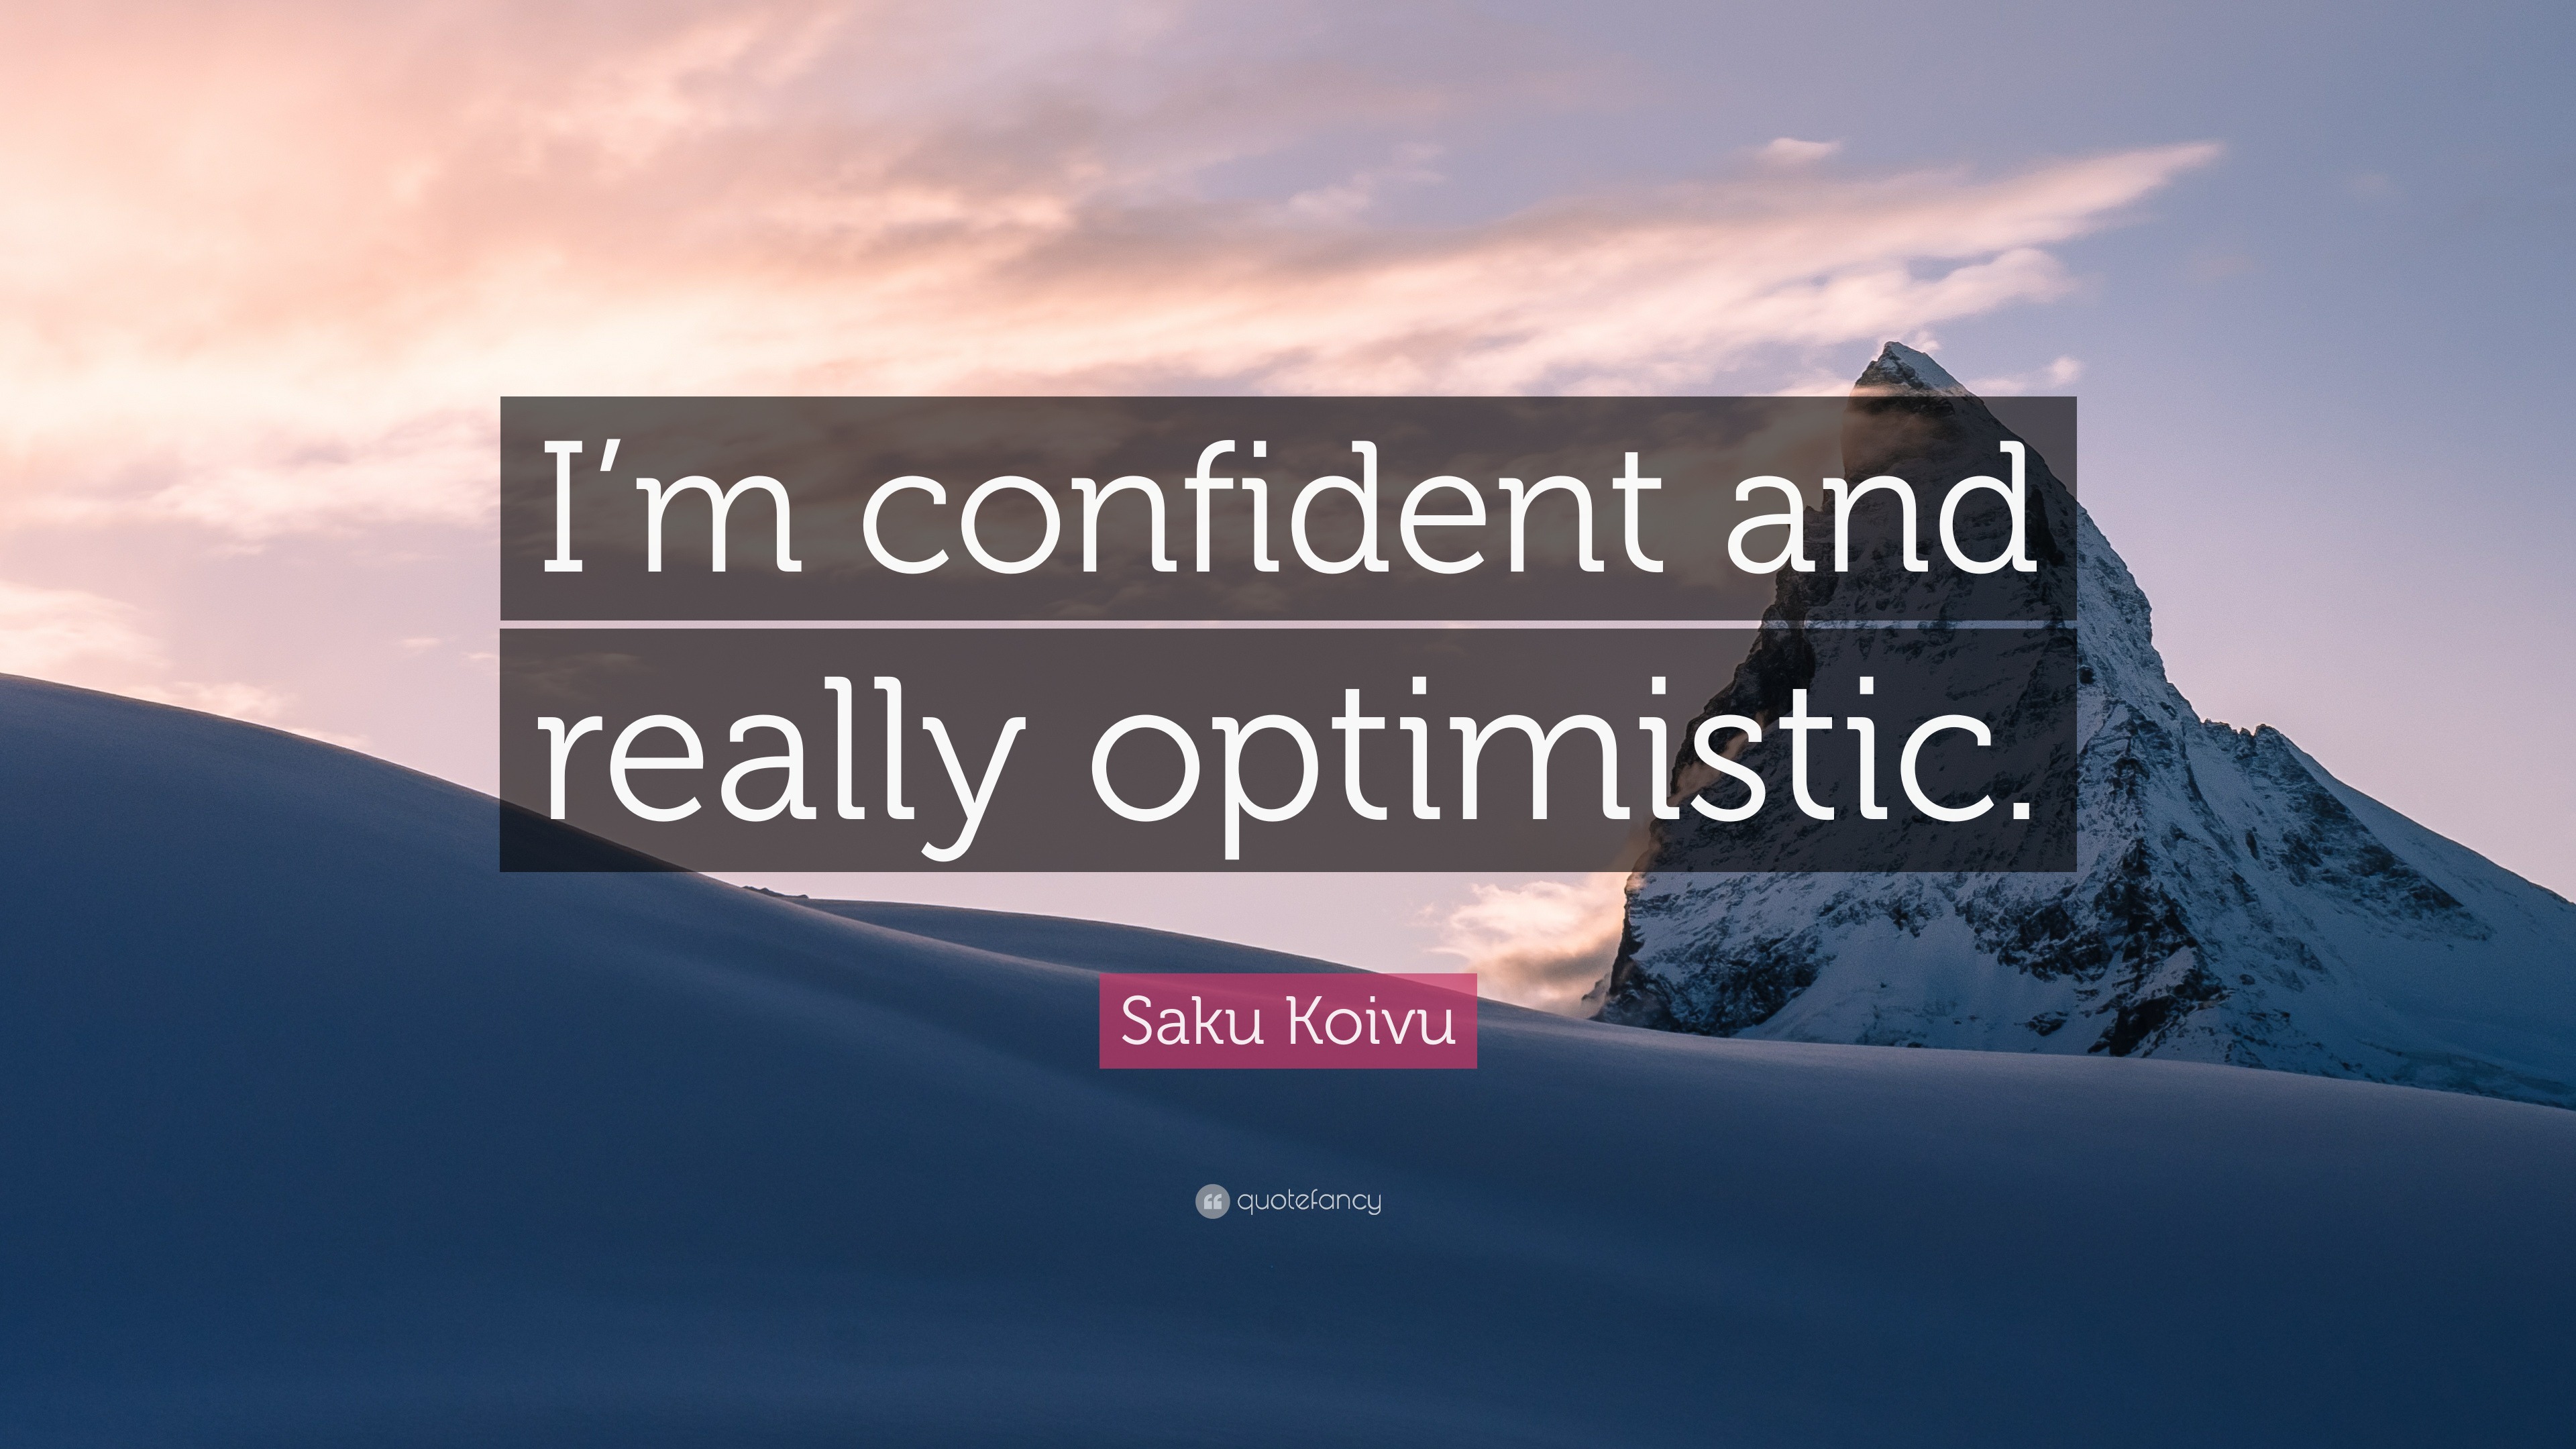 Saku Koivu Quote: “I'm confident and really optimistic.”